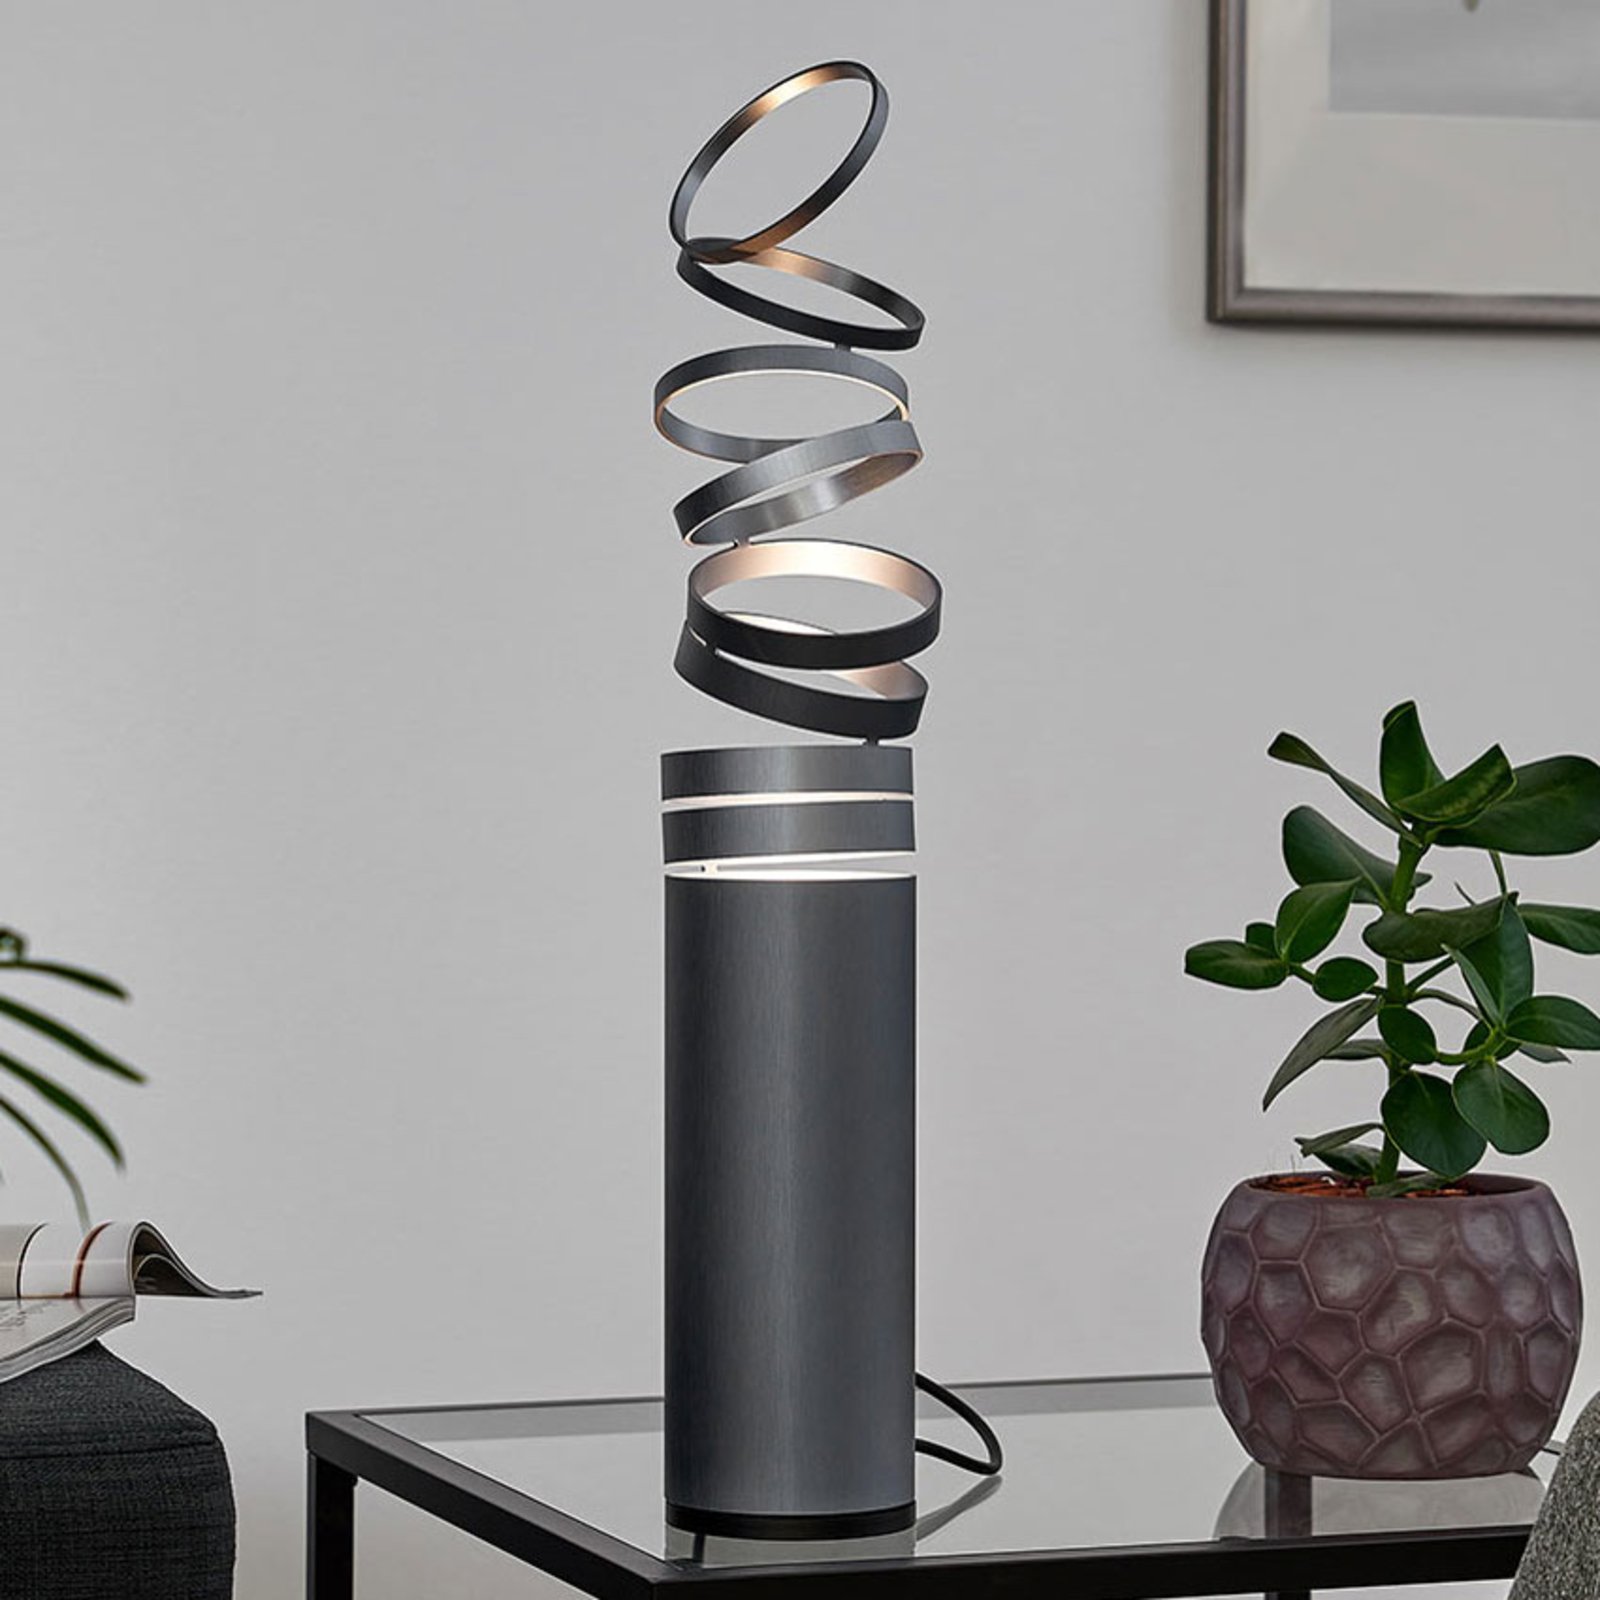 Decompose playful designer table lamp